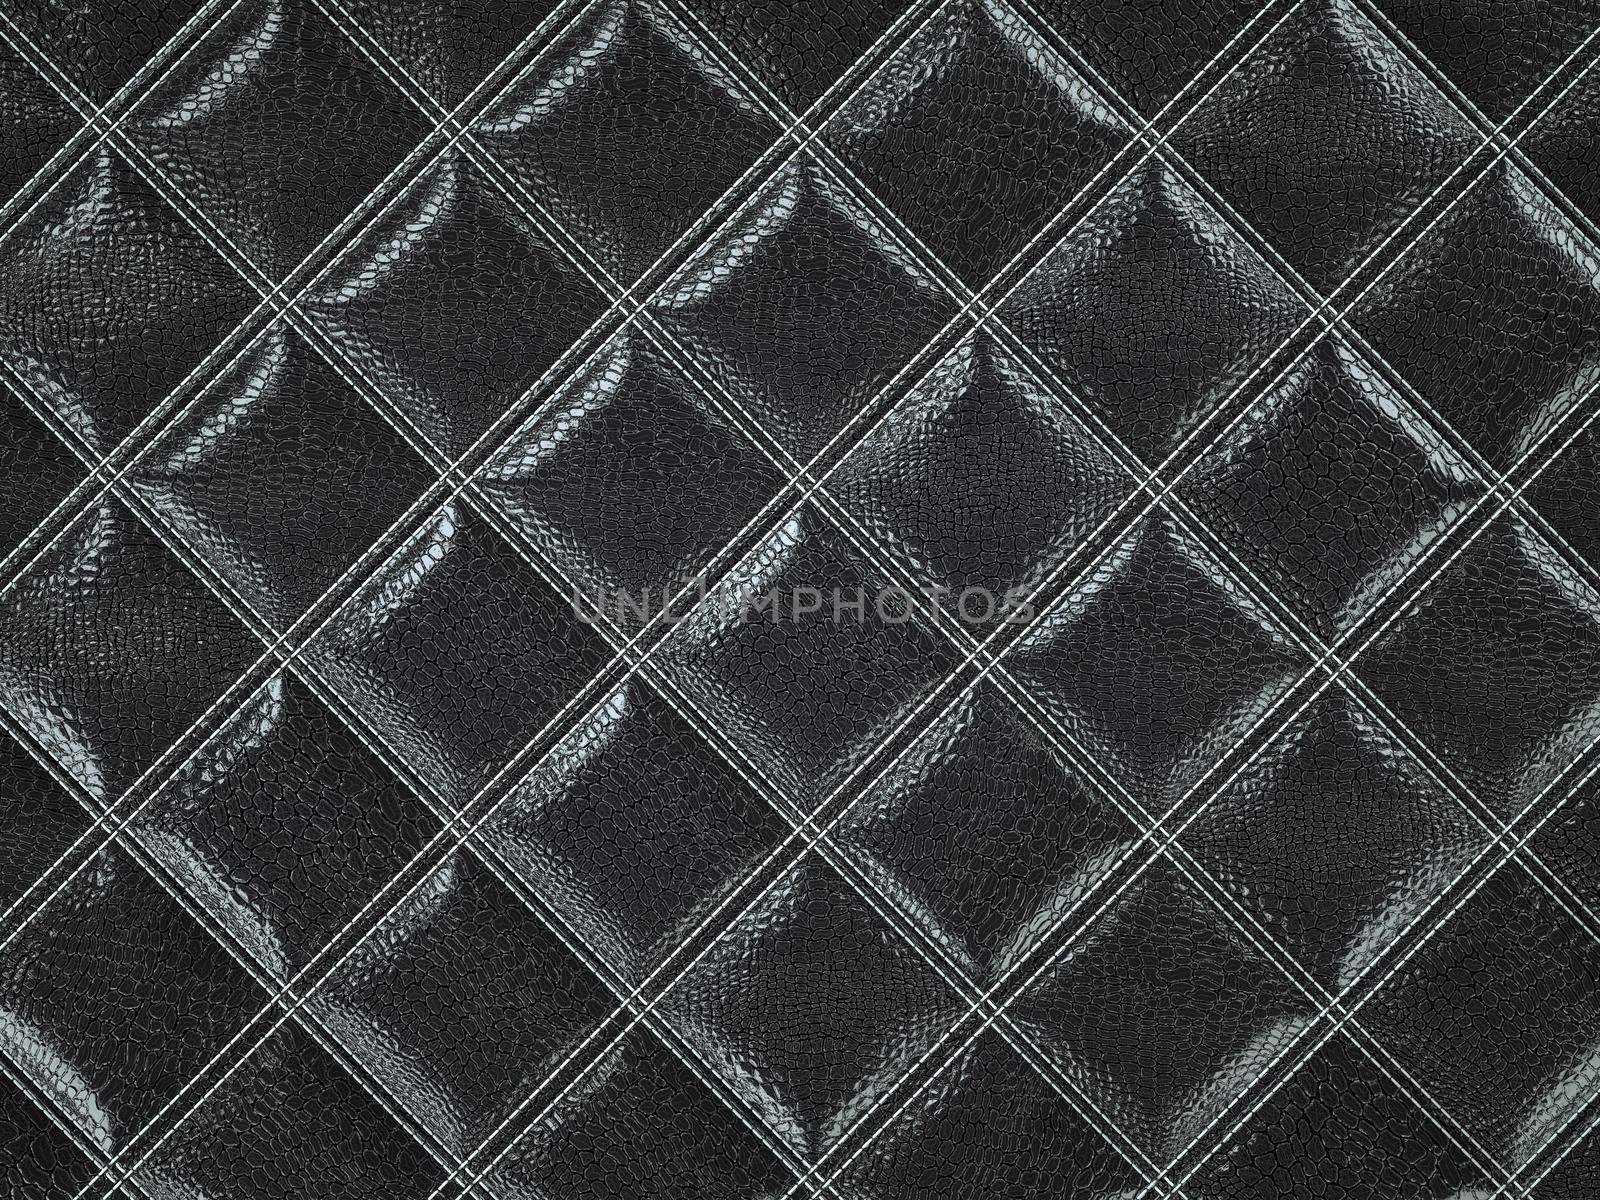 Alligator or crocodile black Leather Square stitched texture by Arsgera